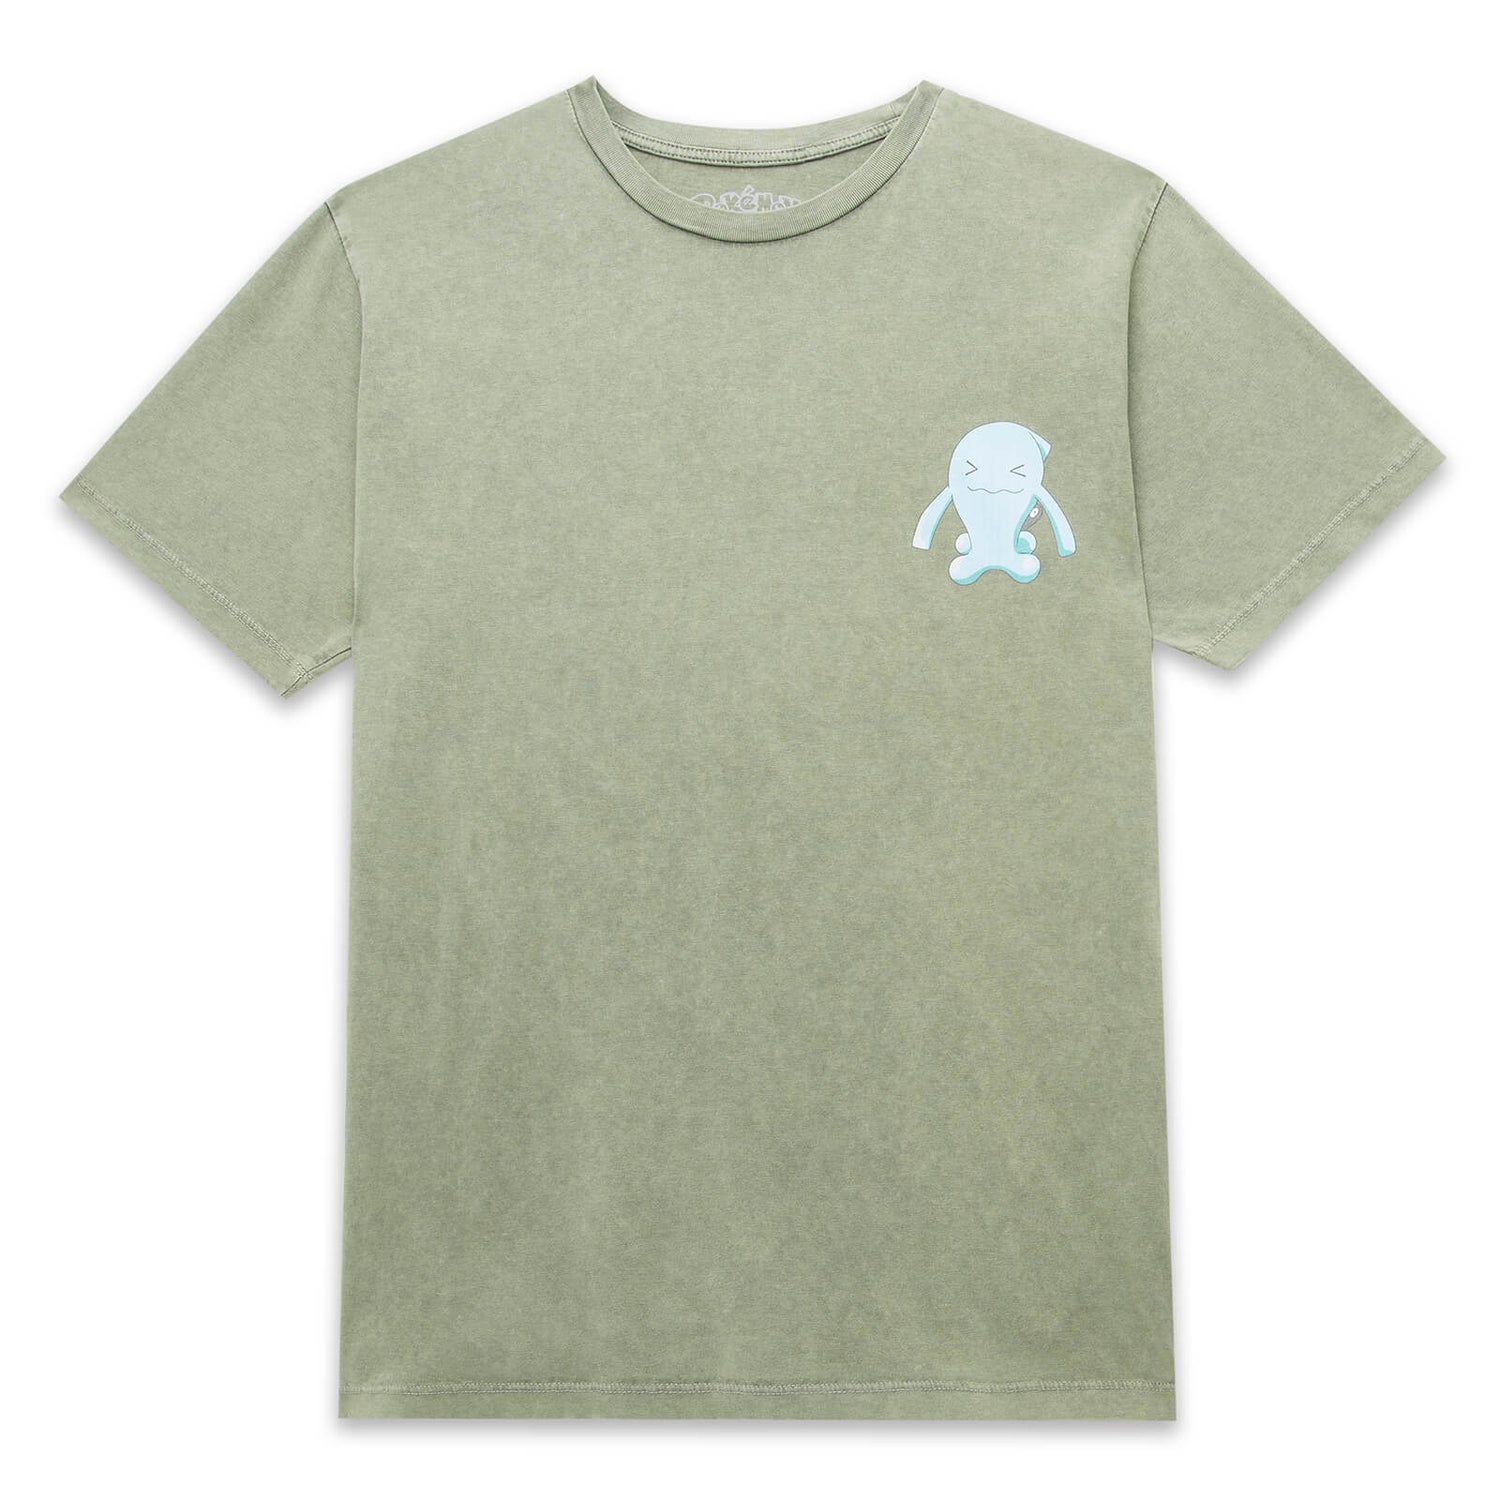 Pokémon Wobbuffet Unisex T-Shirt - Khaki Acid Wash